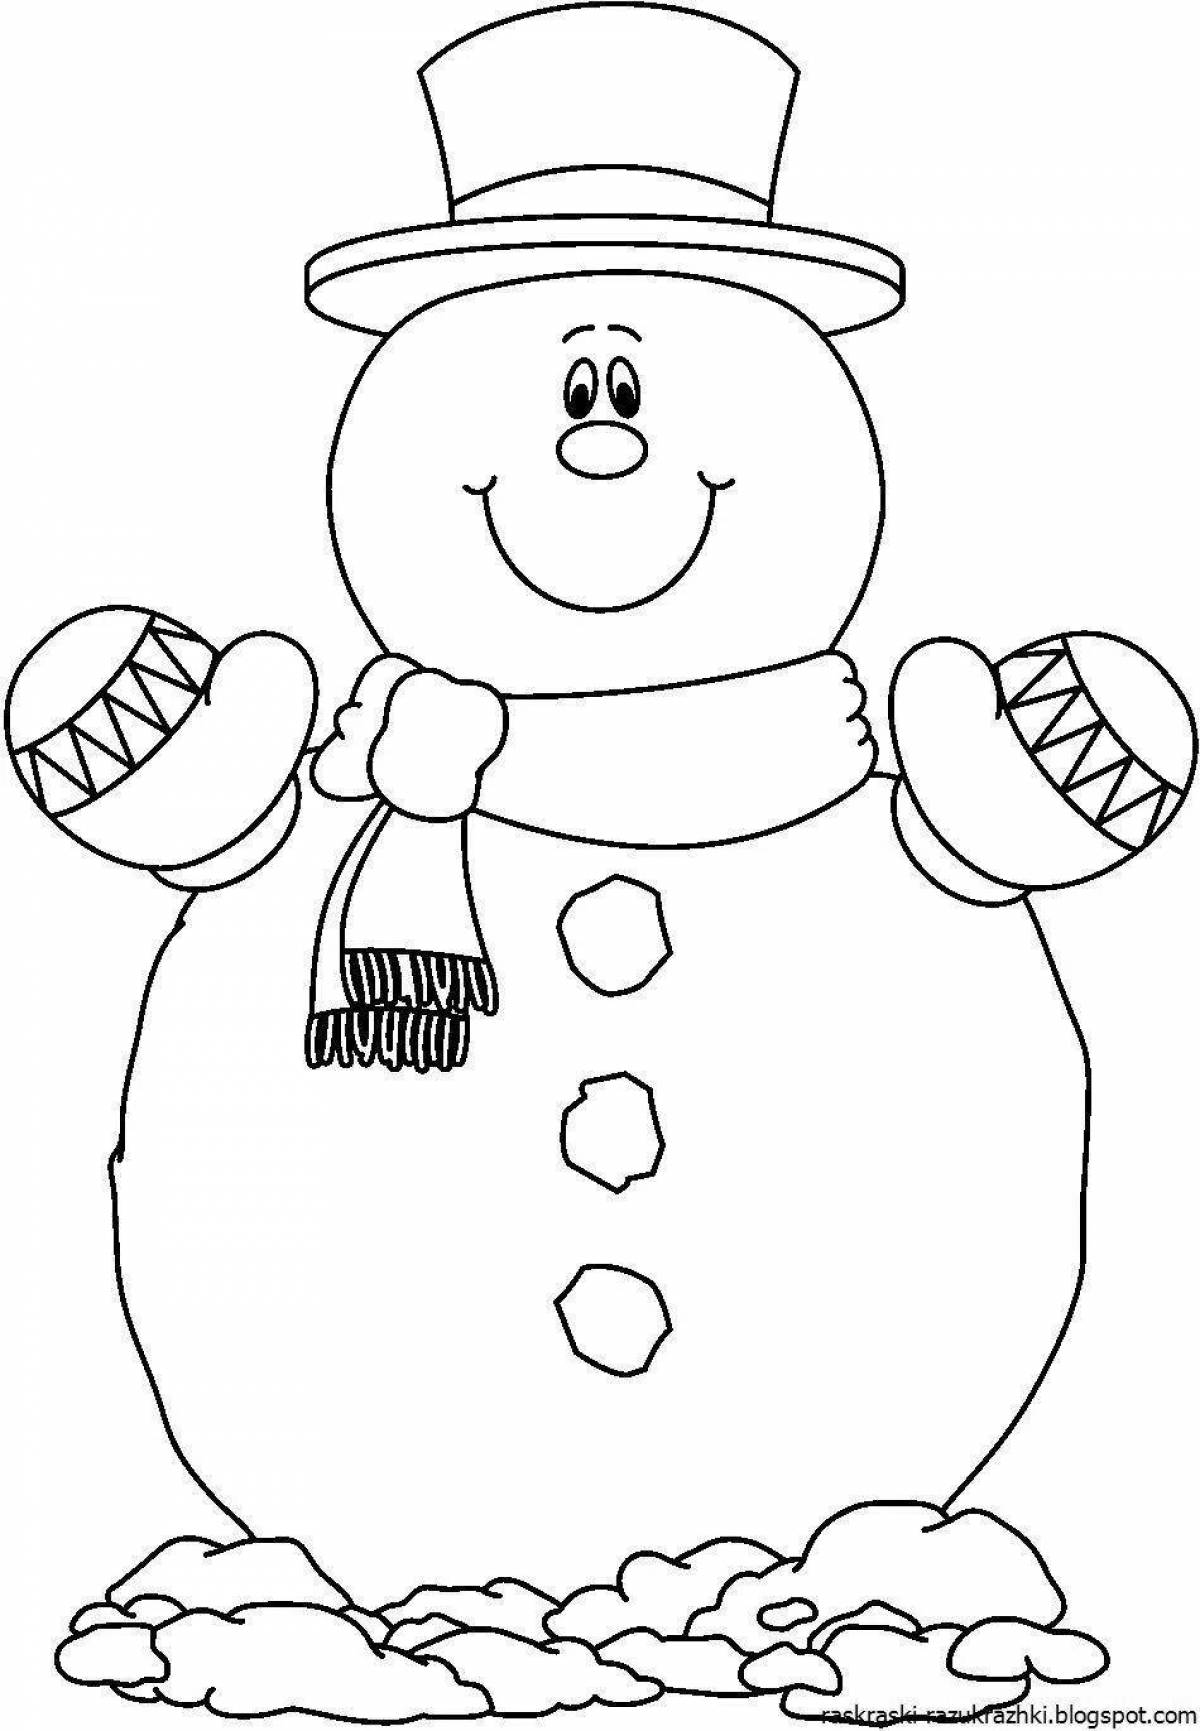 Coloring playful snowman